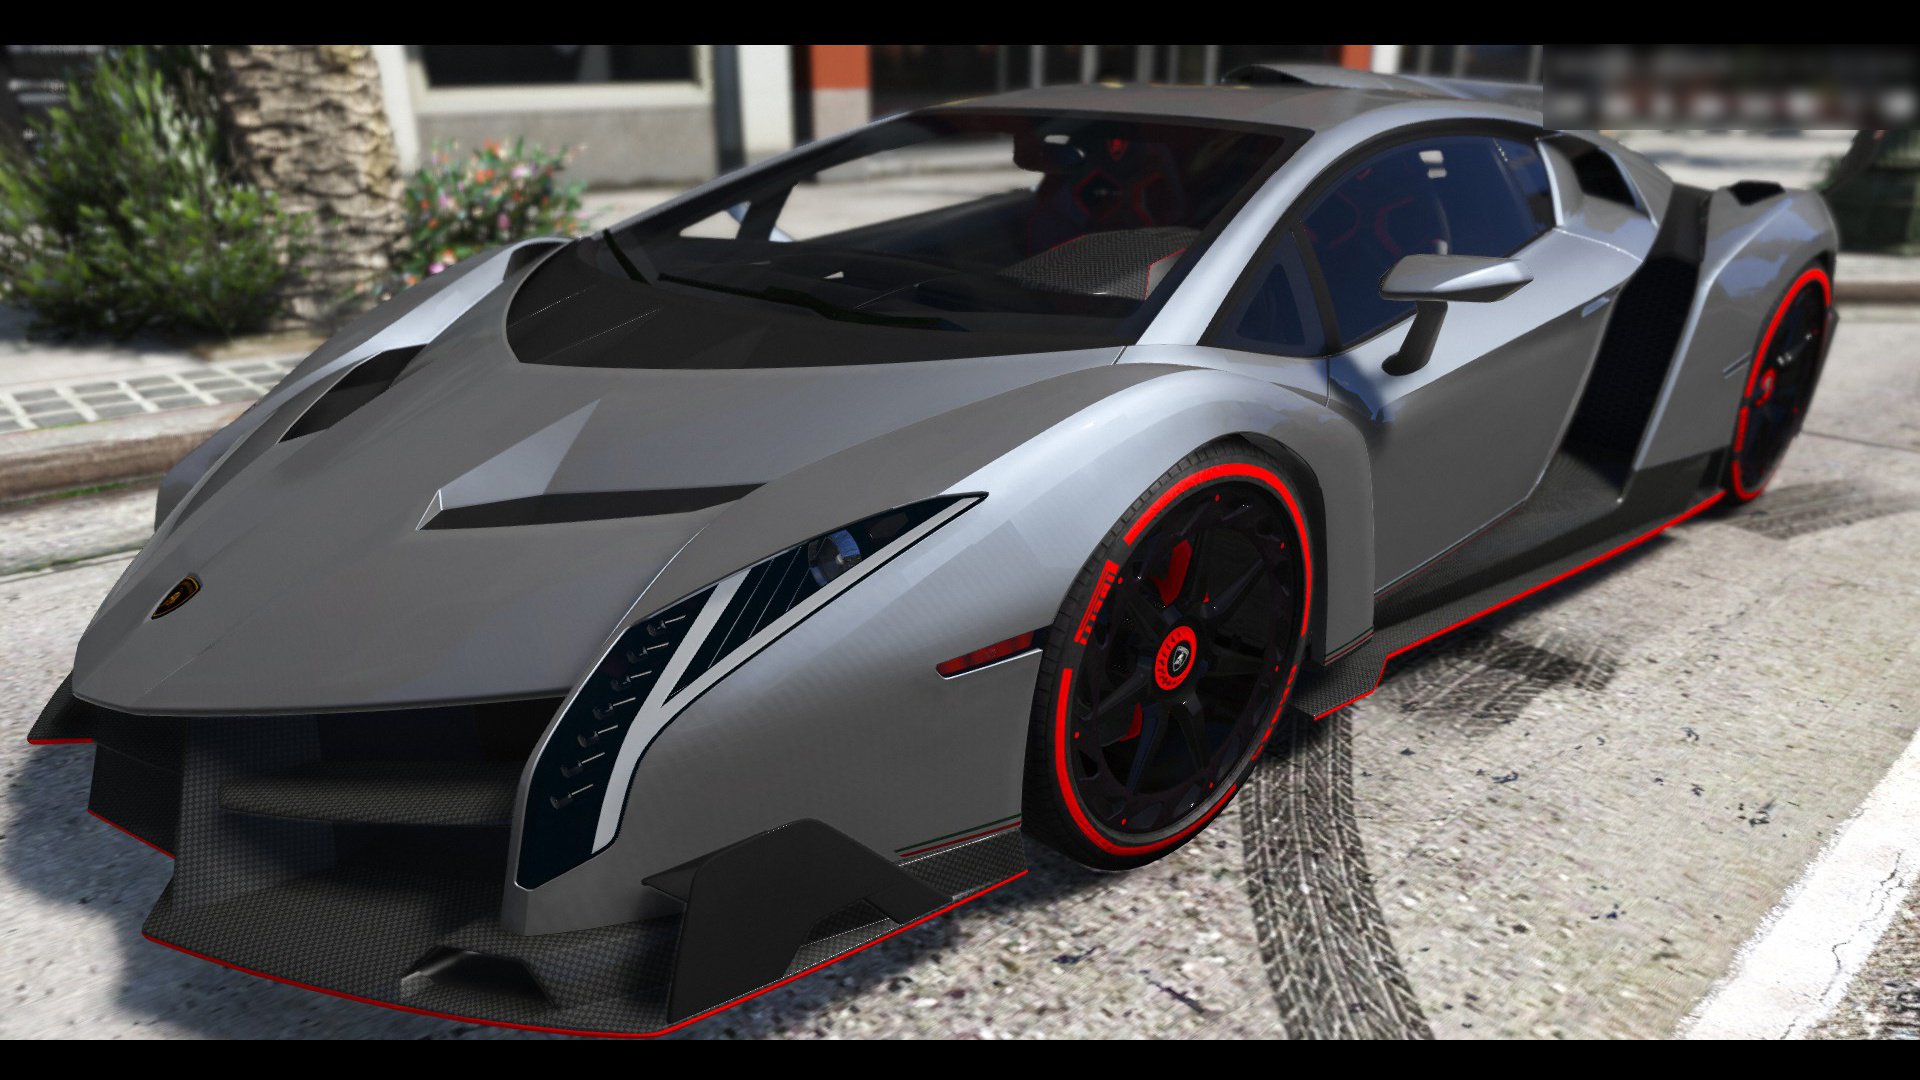 Amazing Lamborghini Veneno Pictures & Backgrounds